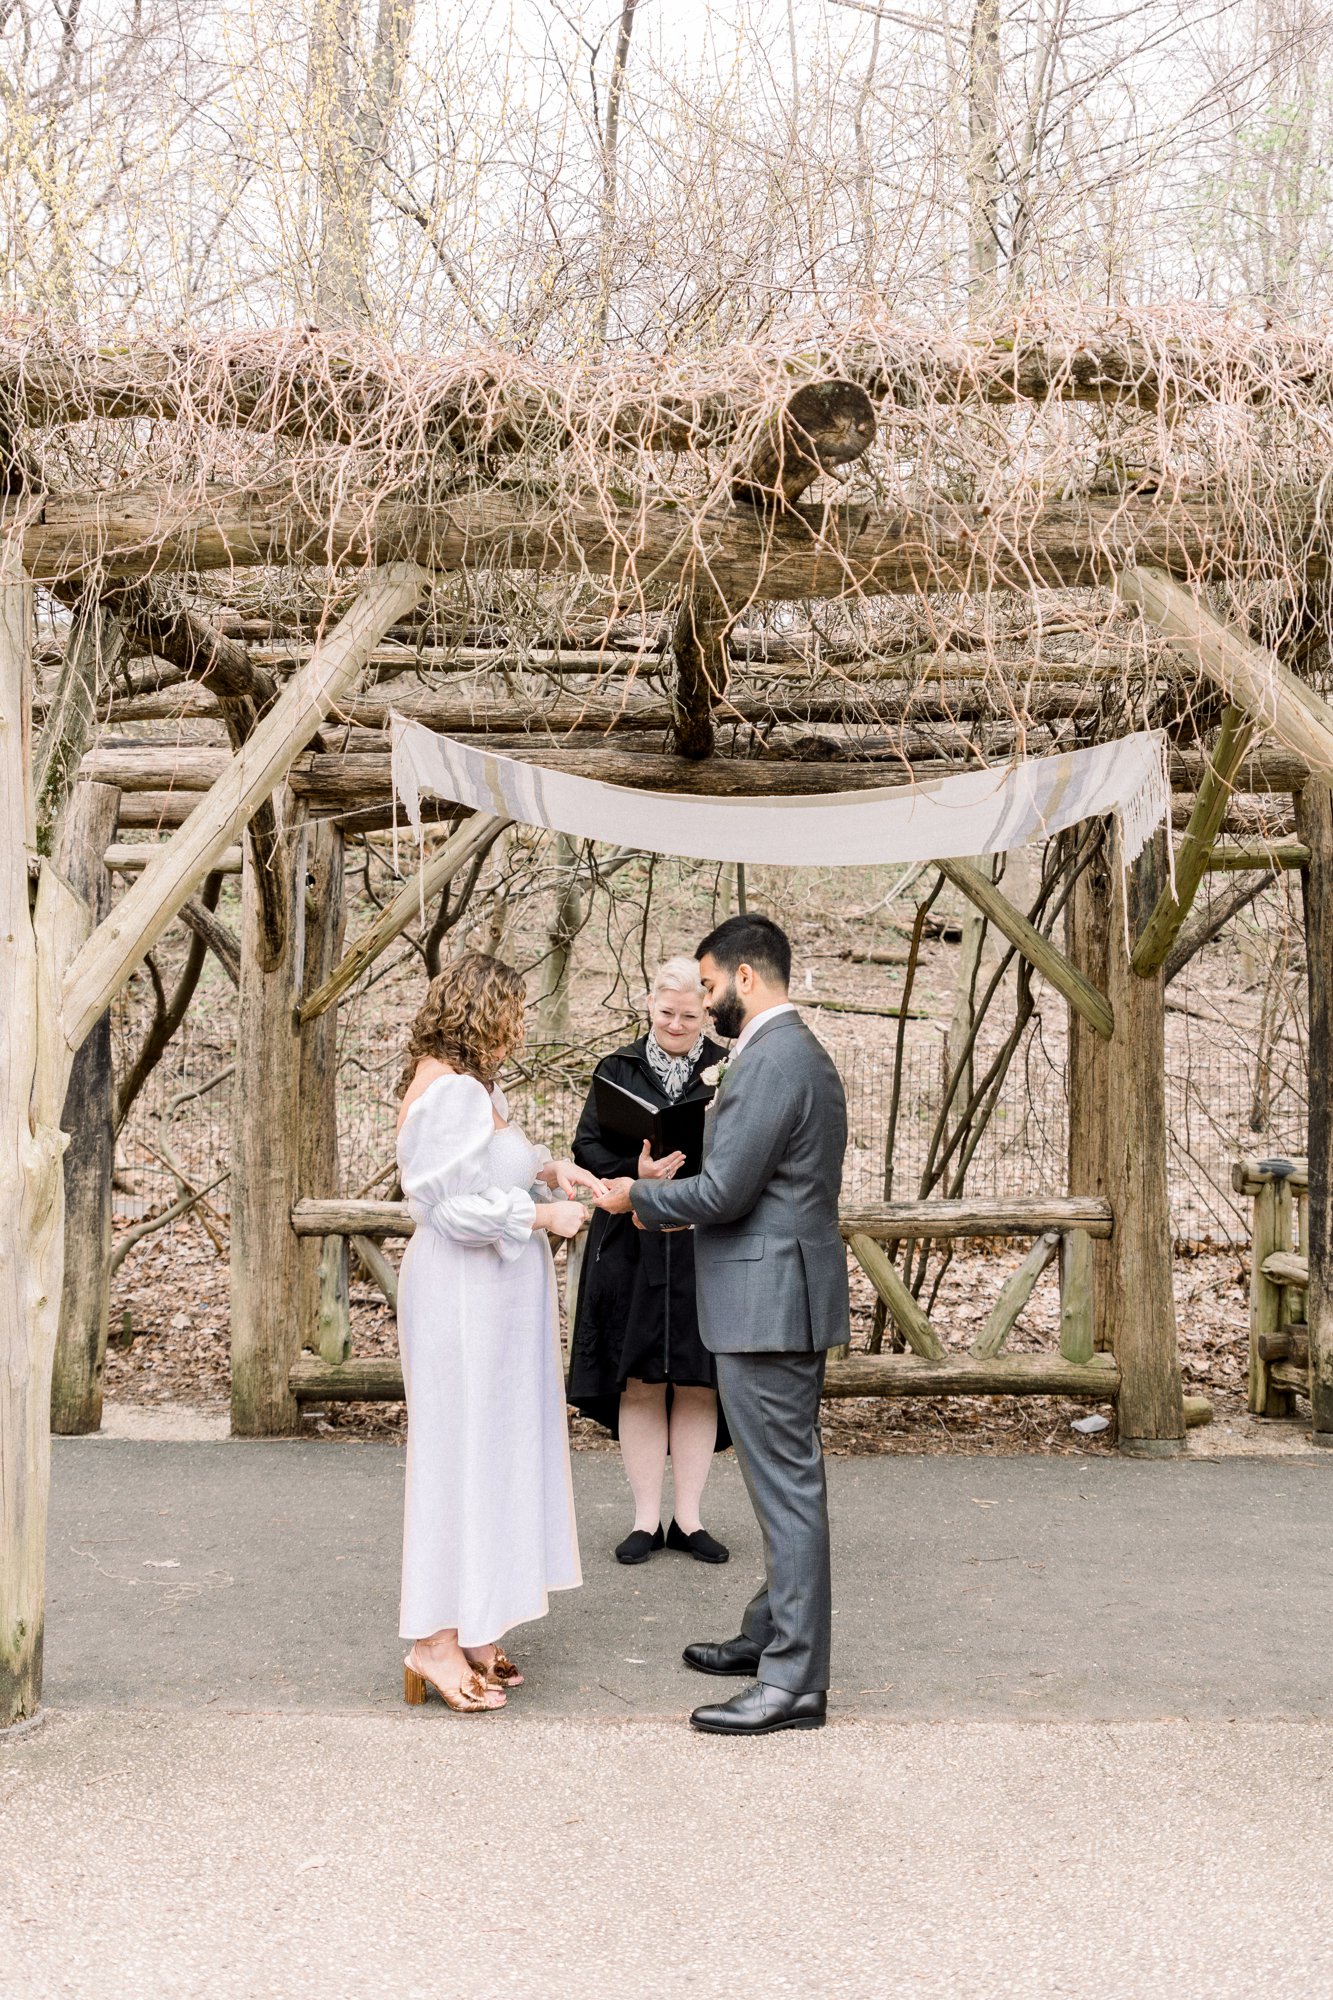 Joyful Prospect Park Wedding Photos with Springtime Cherry Blossoms